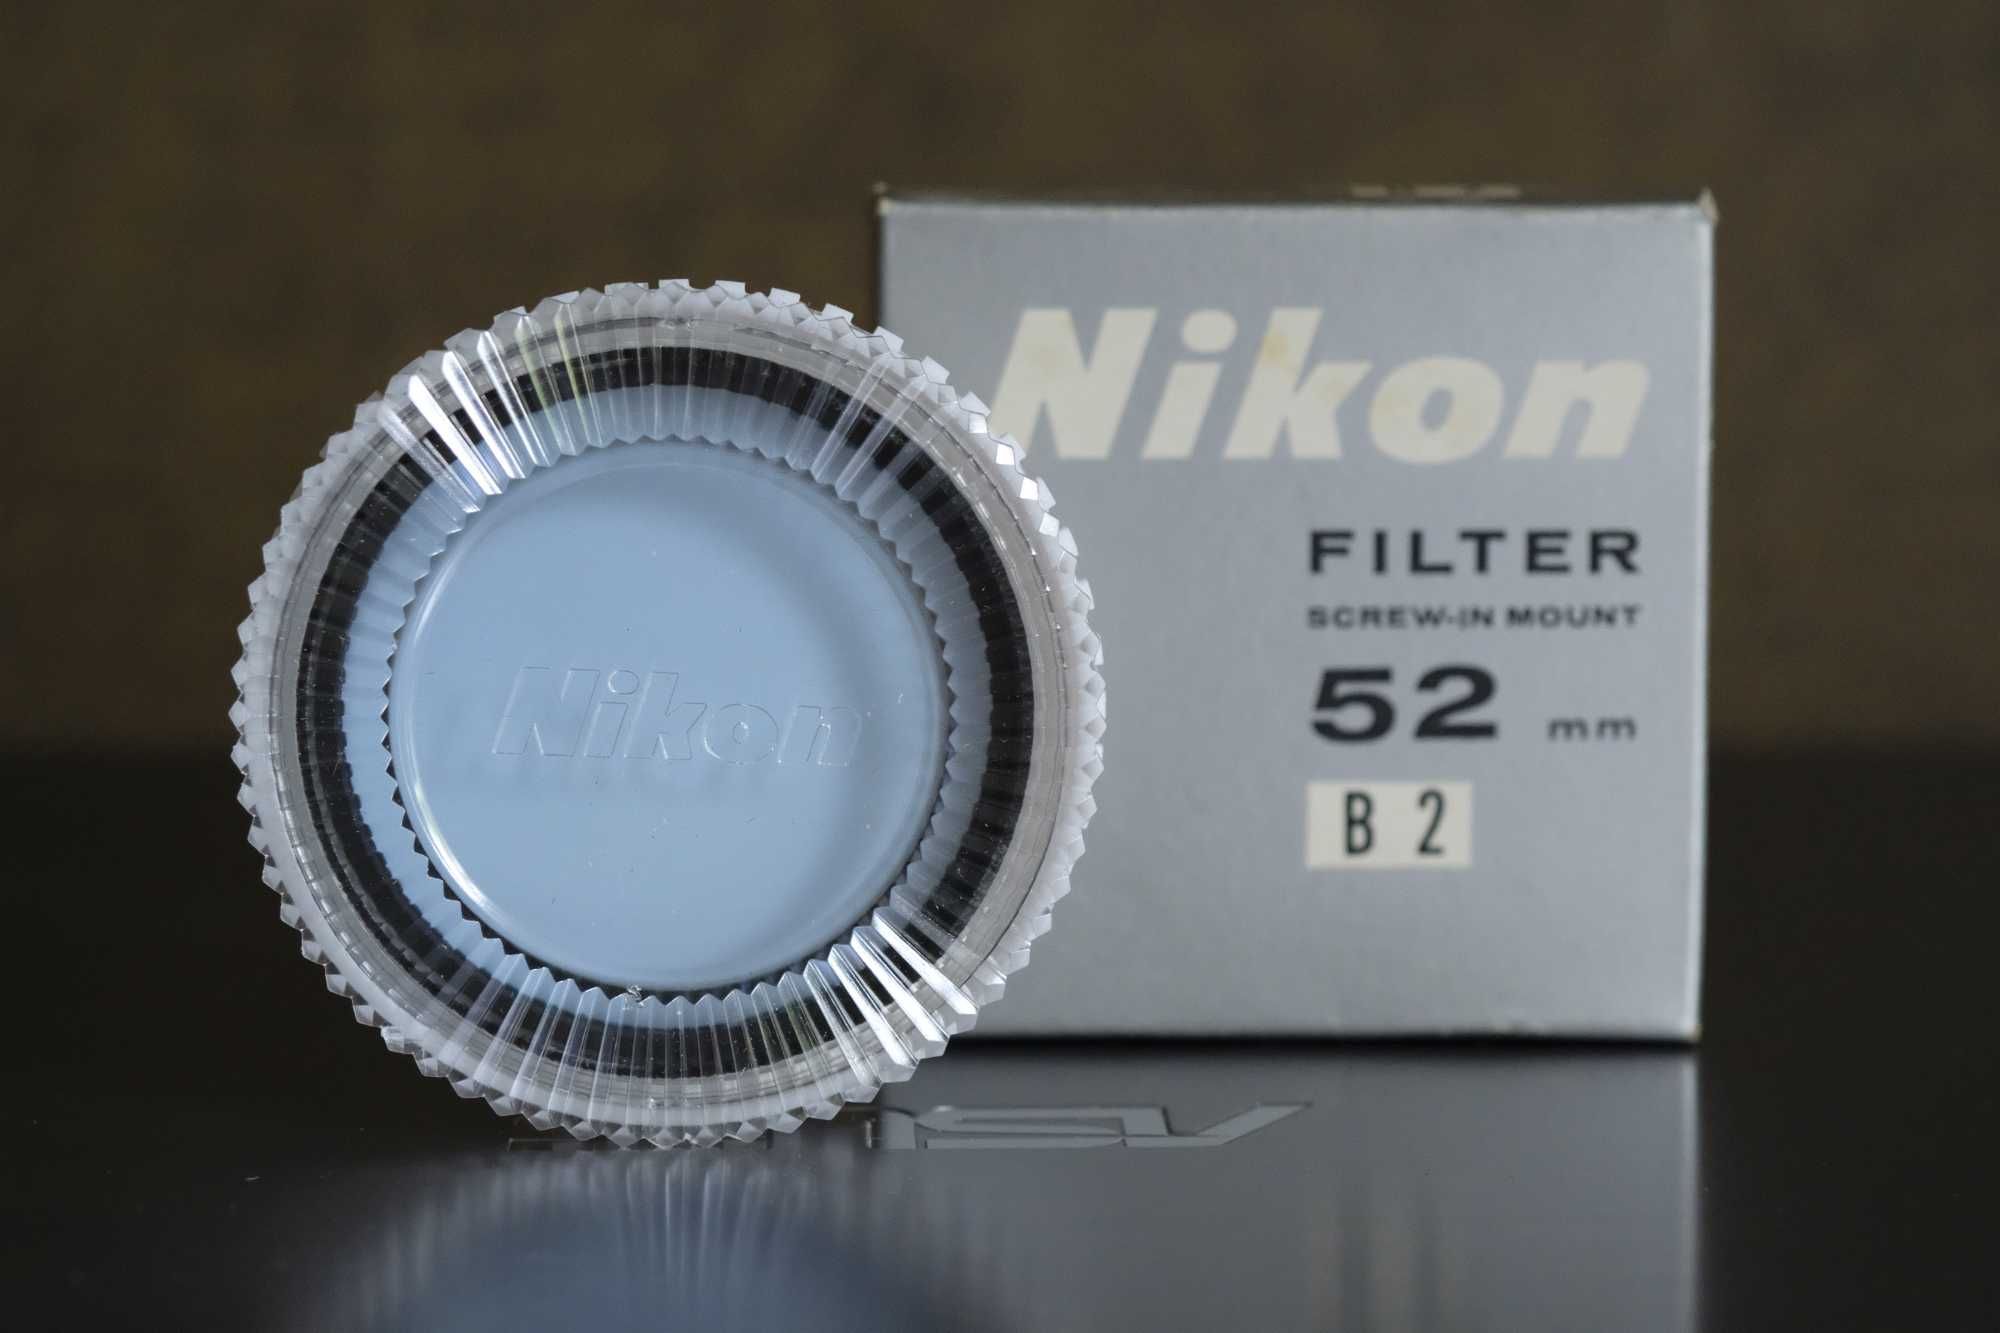 Фильтр Nikon FILTER screw-in mount 52mm A2 B2 оригинал ПЛЕНКА